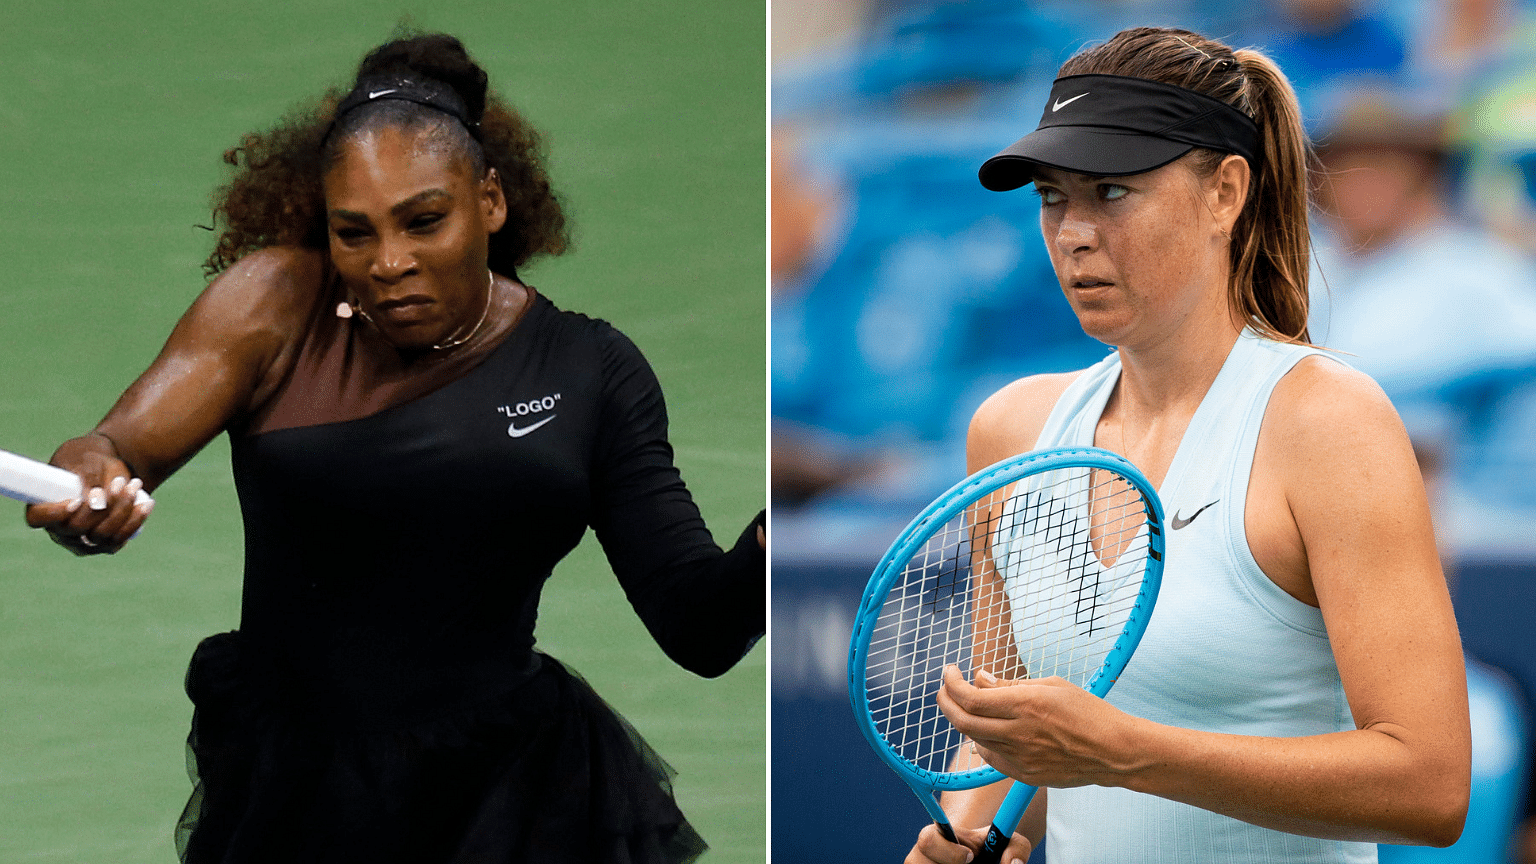 Serena Williams vs. Maria Sharapova is, not surprisingly, getting primetime billing at the US Open.